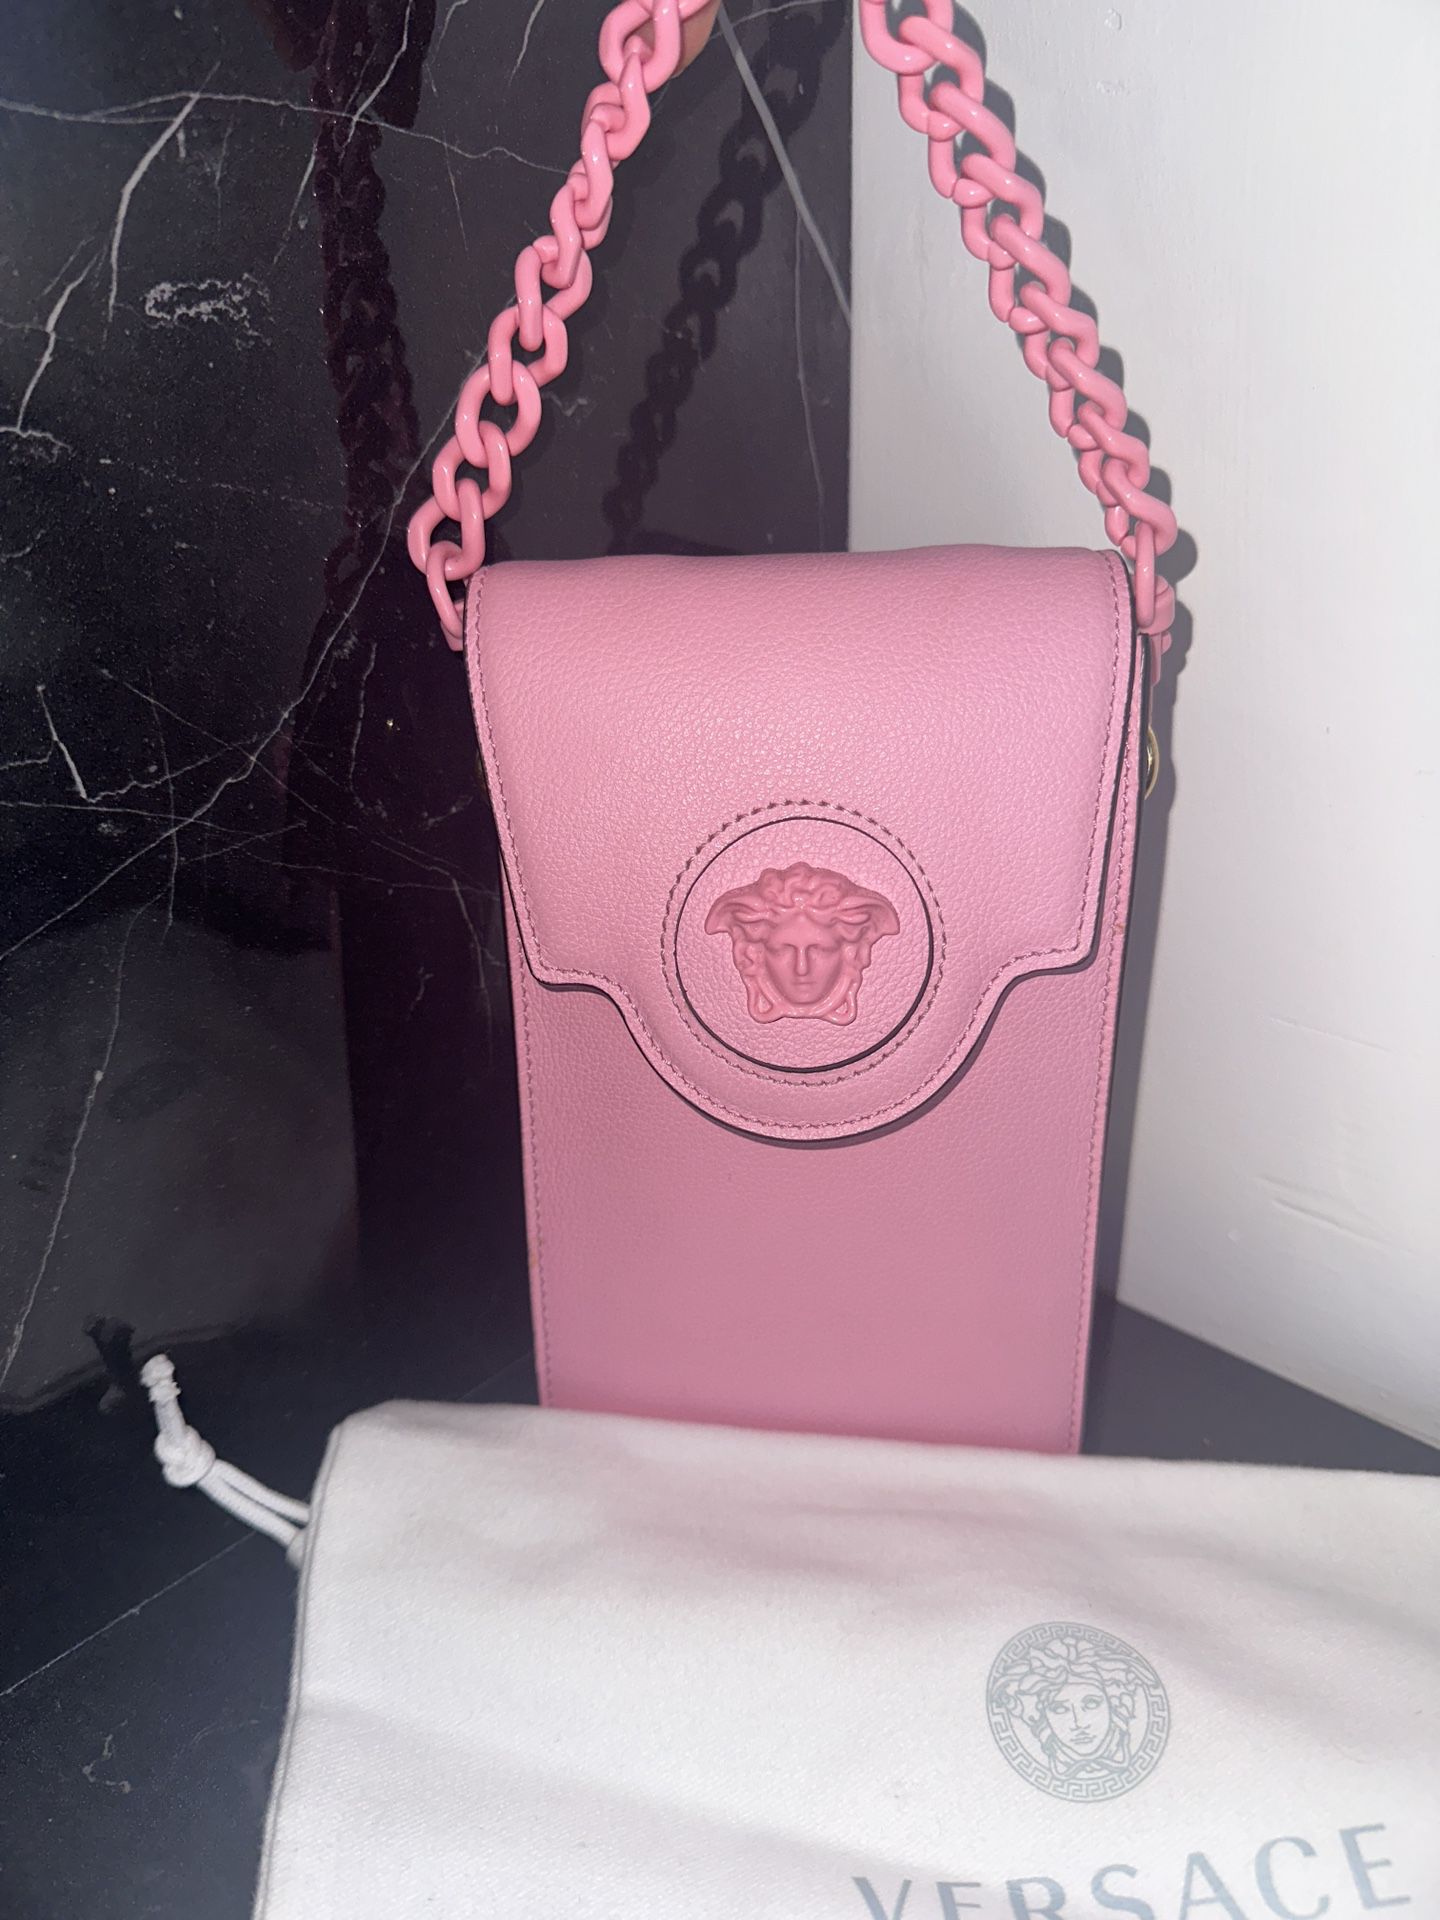 Versace, Authentic Crossbody, Mobile Phone Travel, Pink Medusa Bag Purse